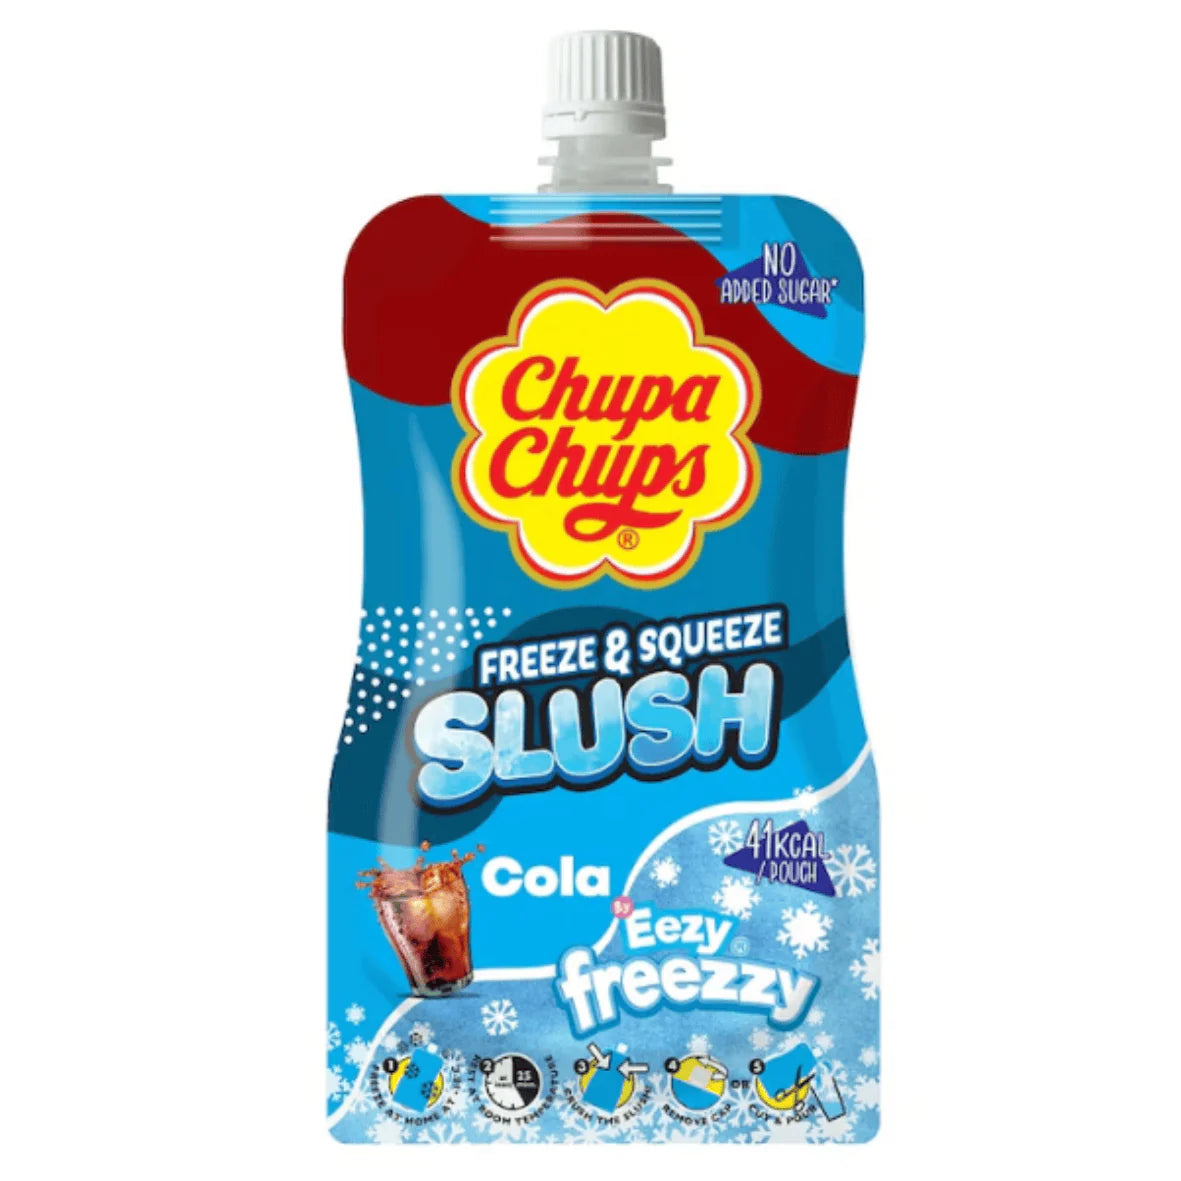 Chupa Chups - Slush Cola (250ml)